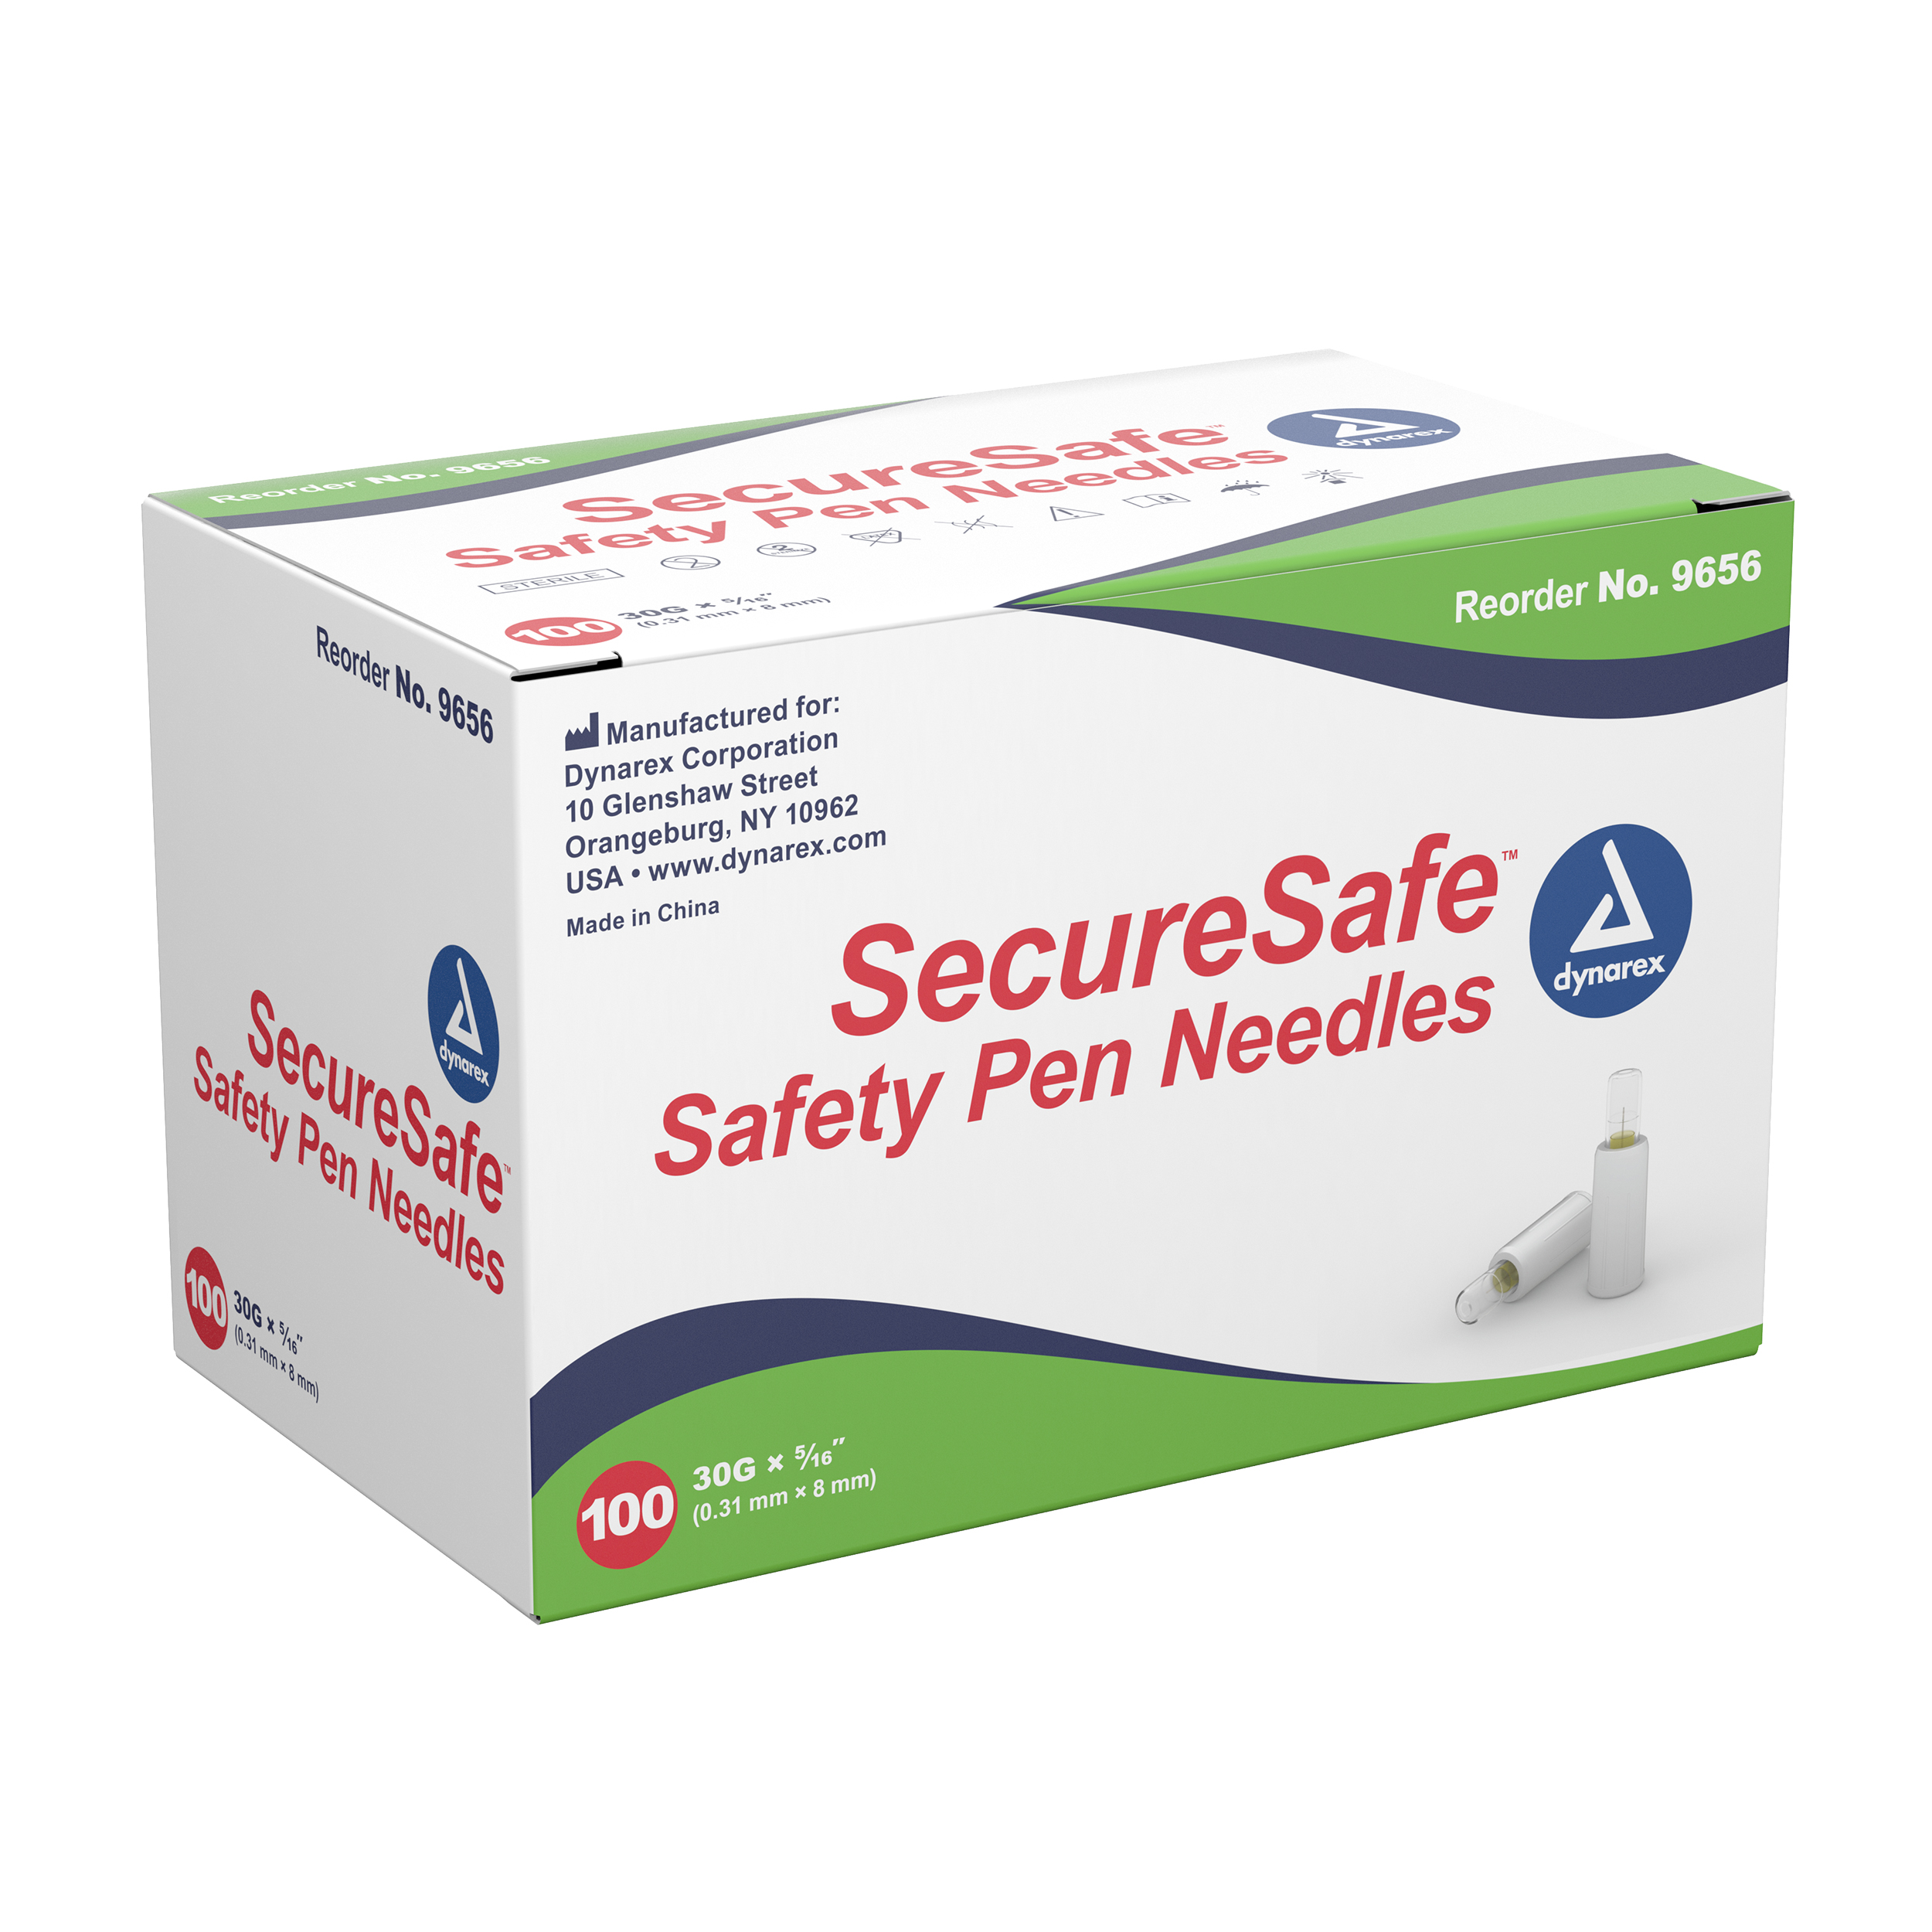 SecureSafe™ Safety Pen Needle 30G - 8mm